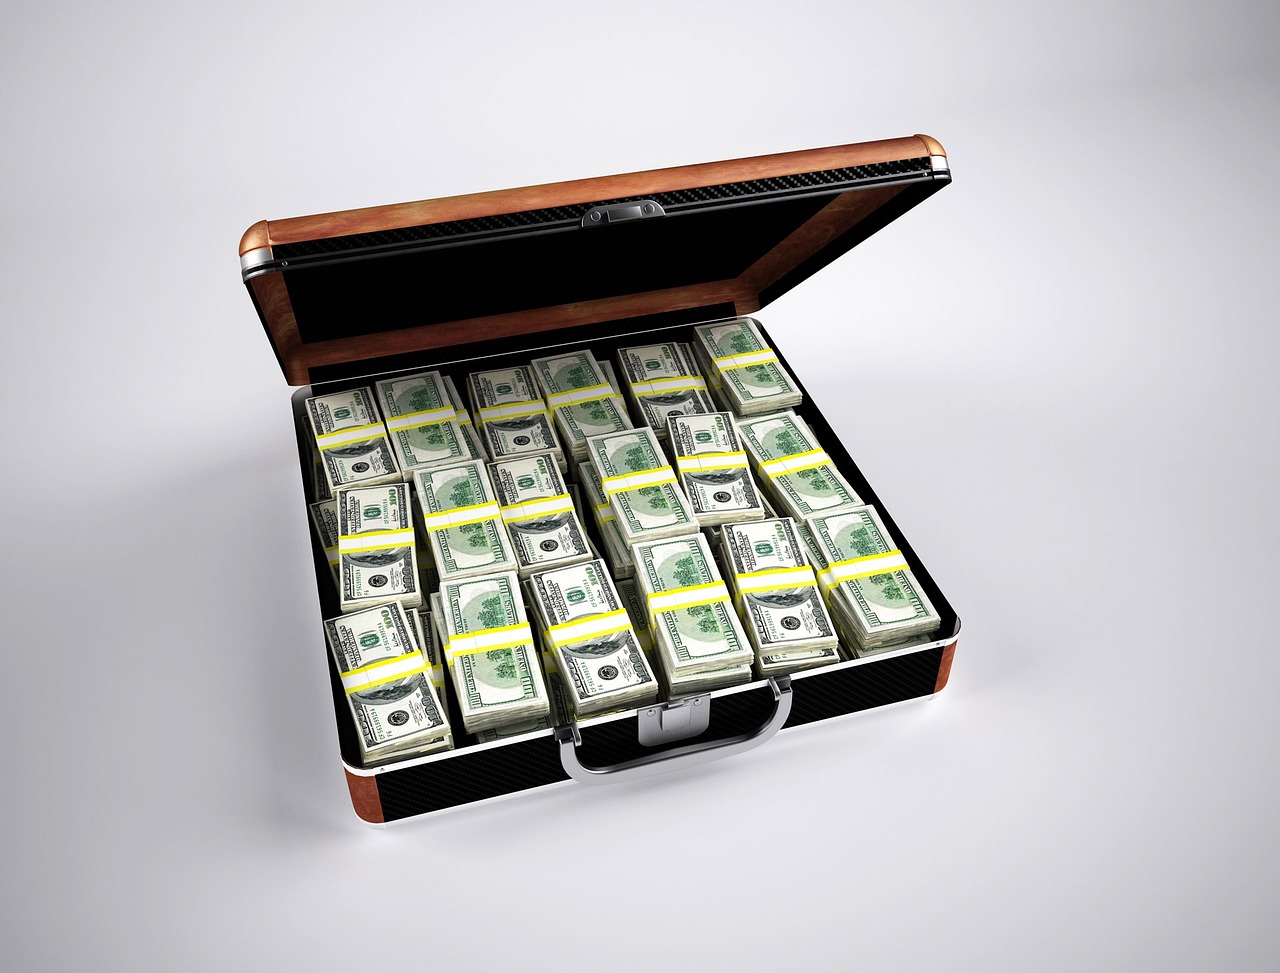 ESG bonus Picture by Pixabay shows suitcase full of dollar bills